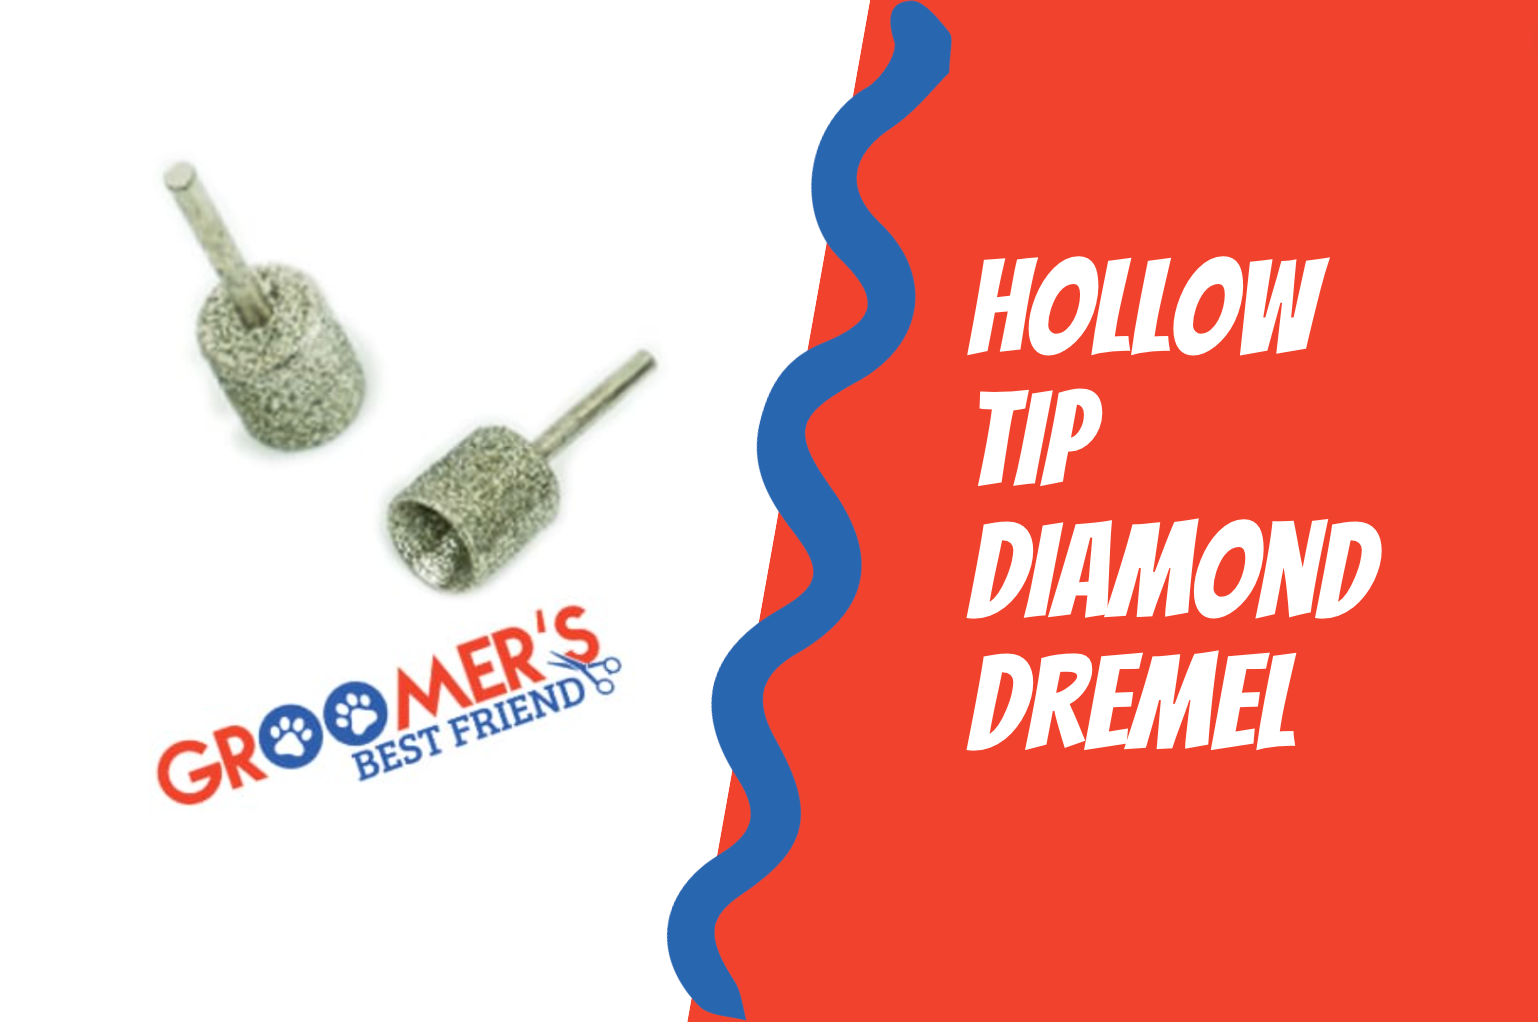 Load video: Hollow Tip Diamond Dremel